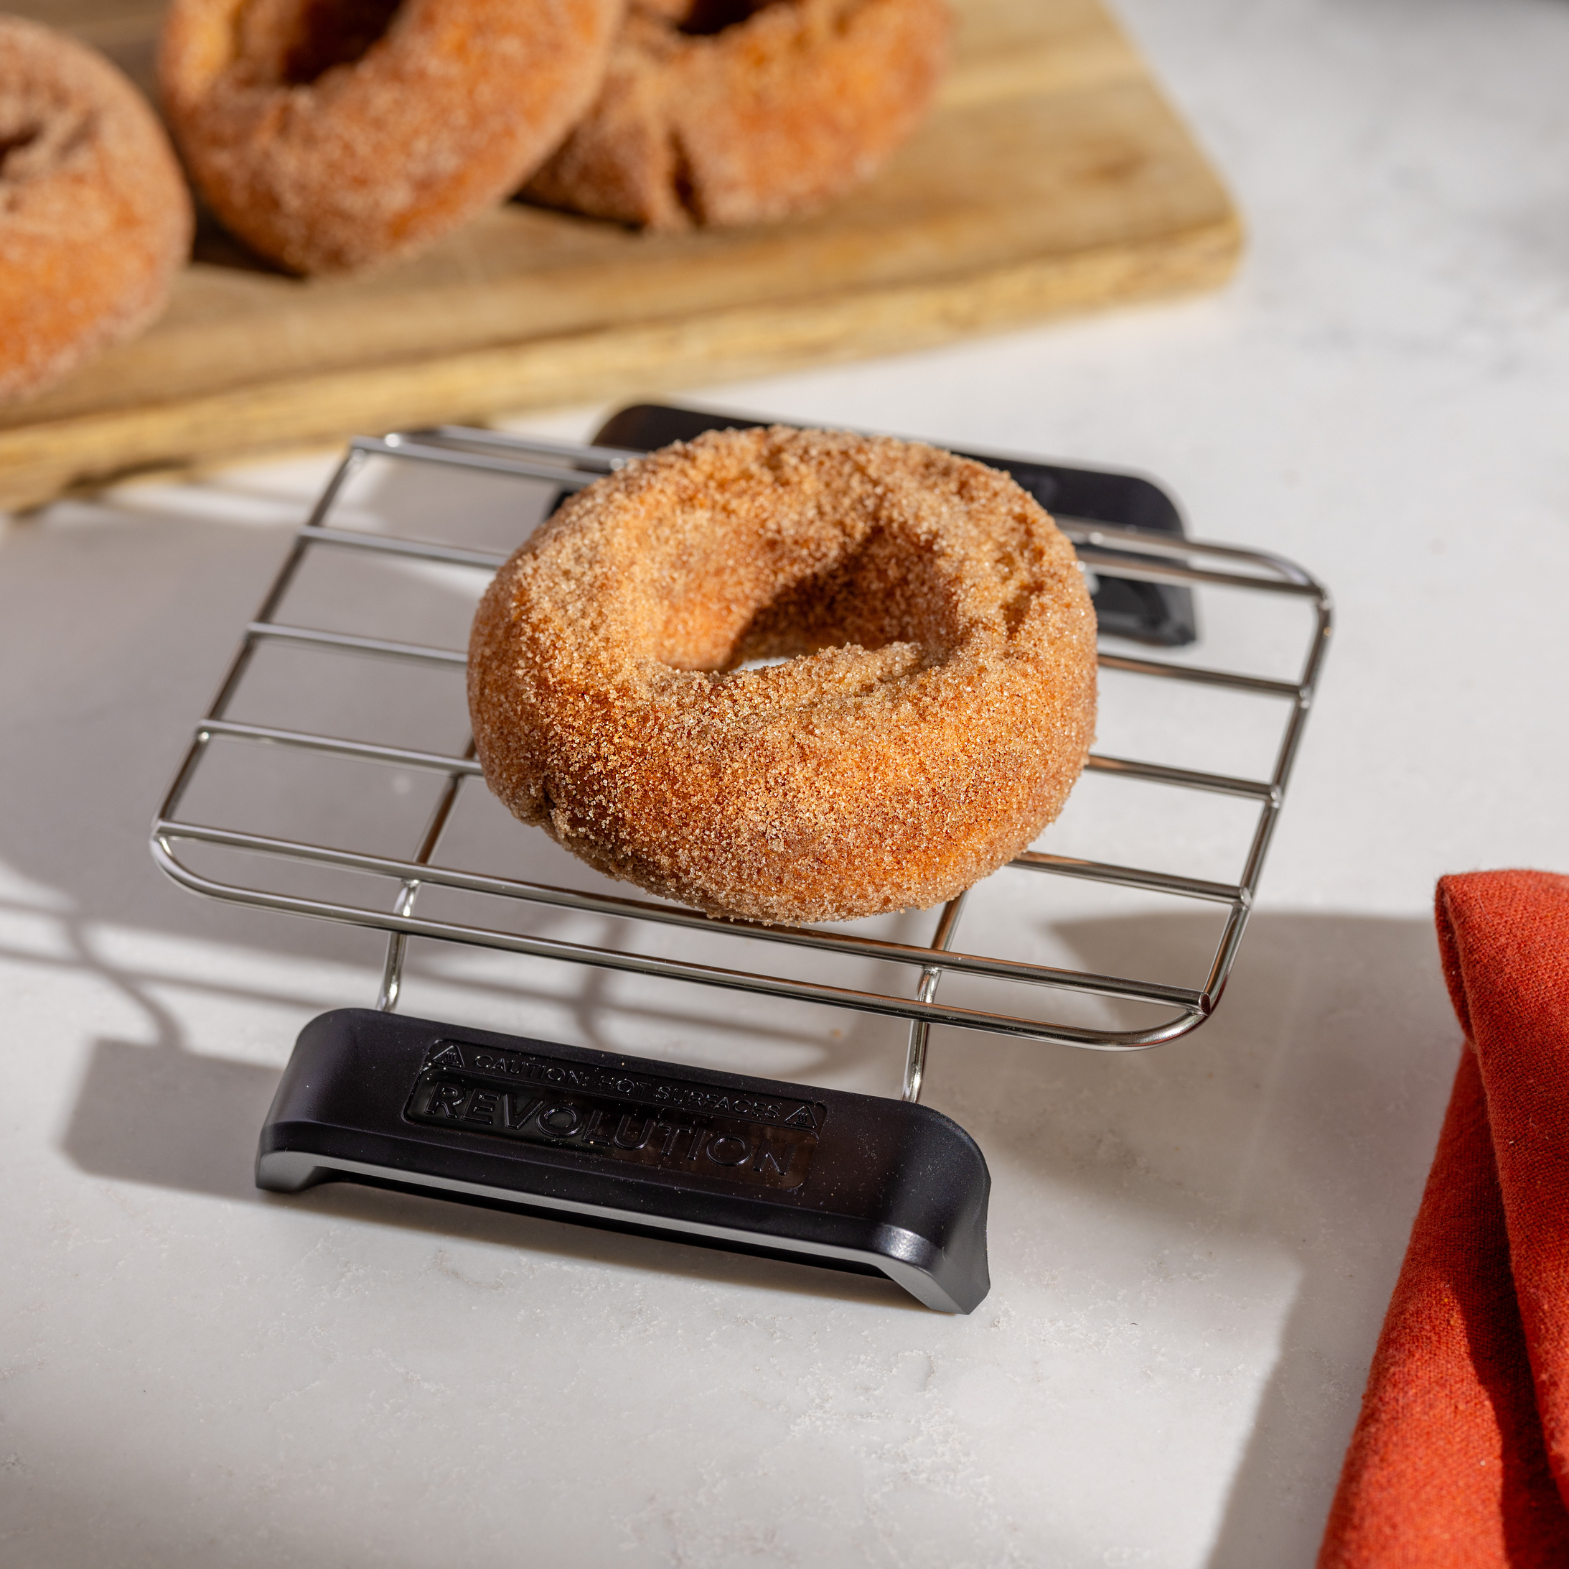 doughnut on warming rack